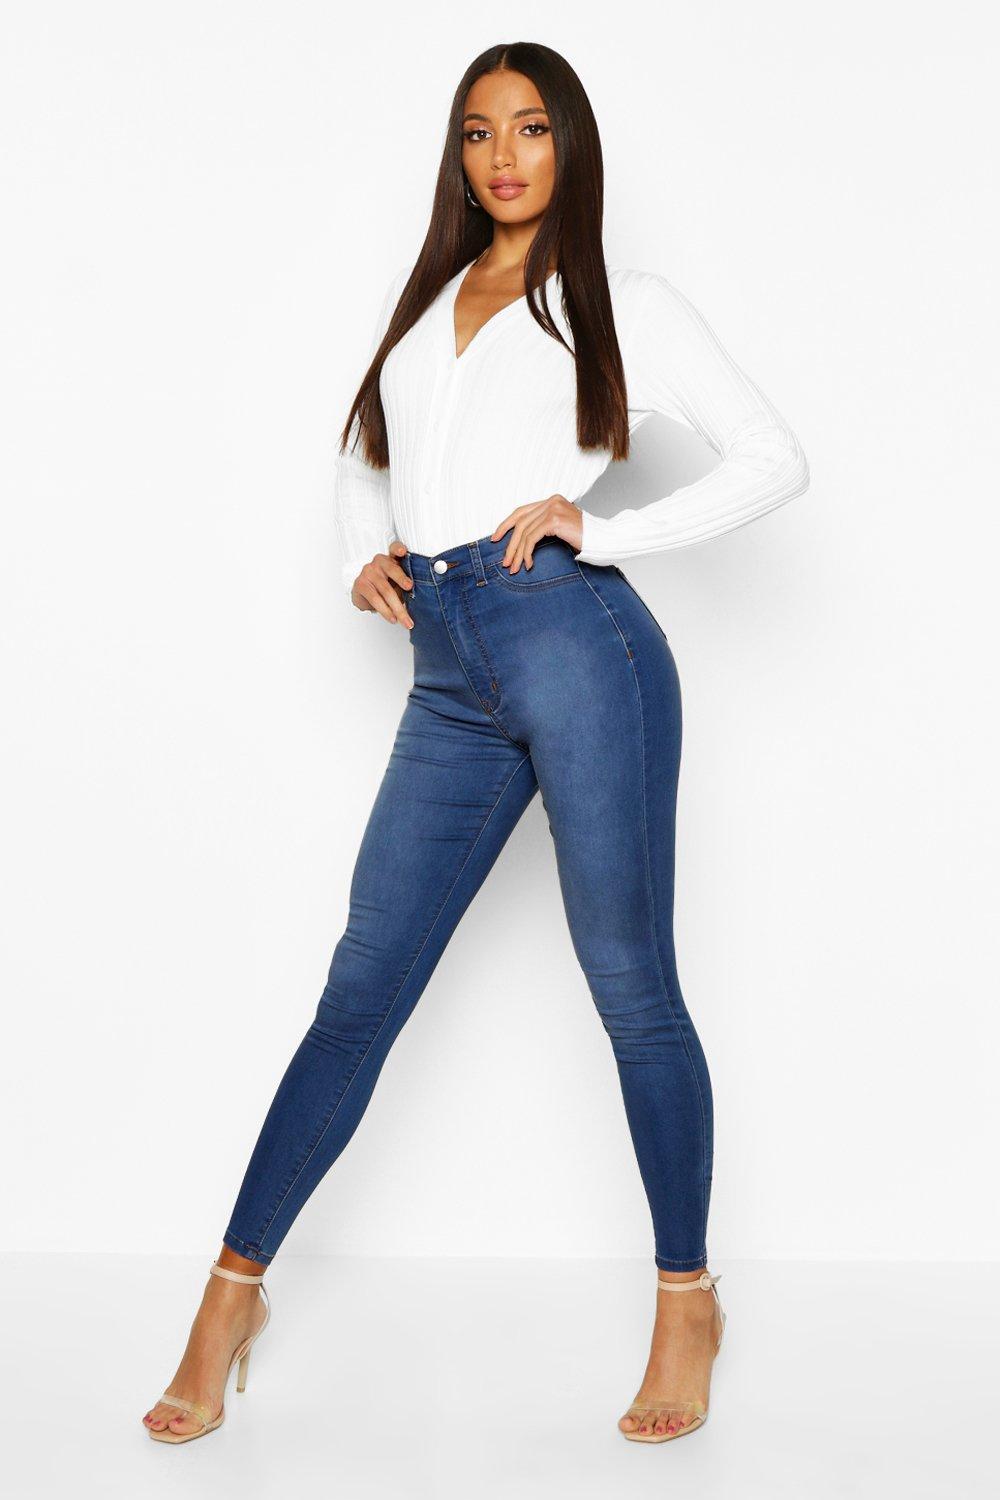 CAICJ98 Womens Jeans Jeans for Women High Waist Elastic Skinny